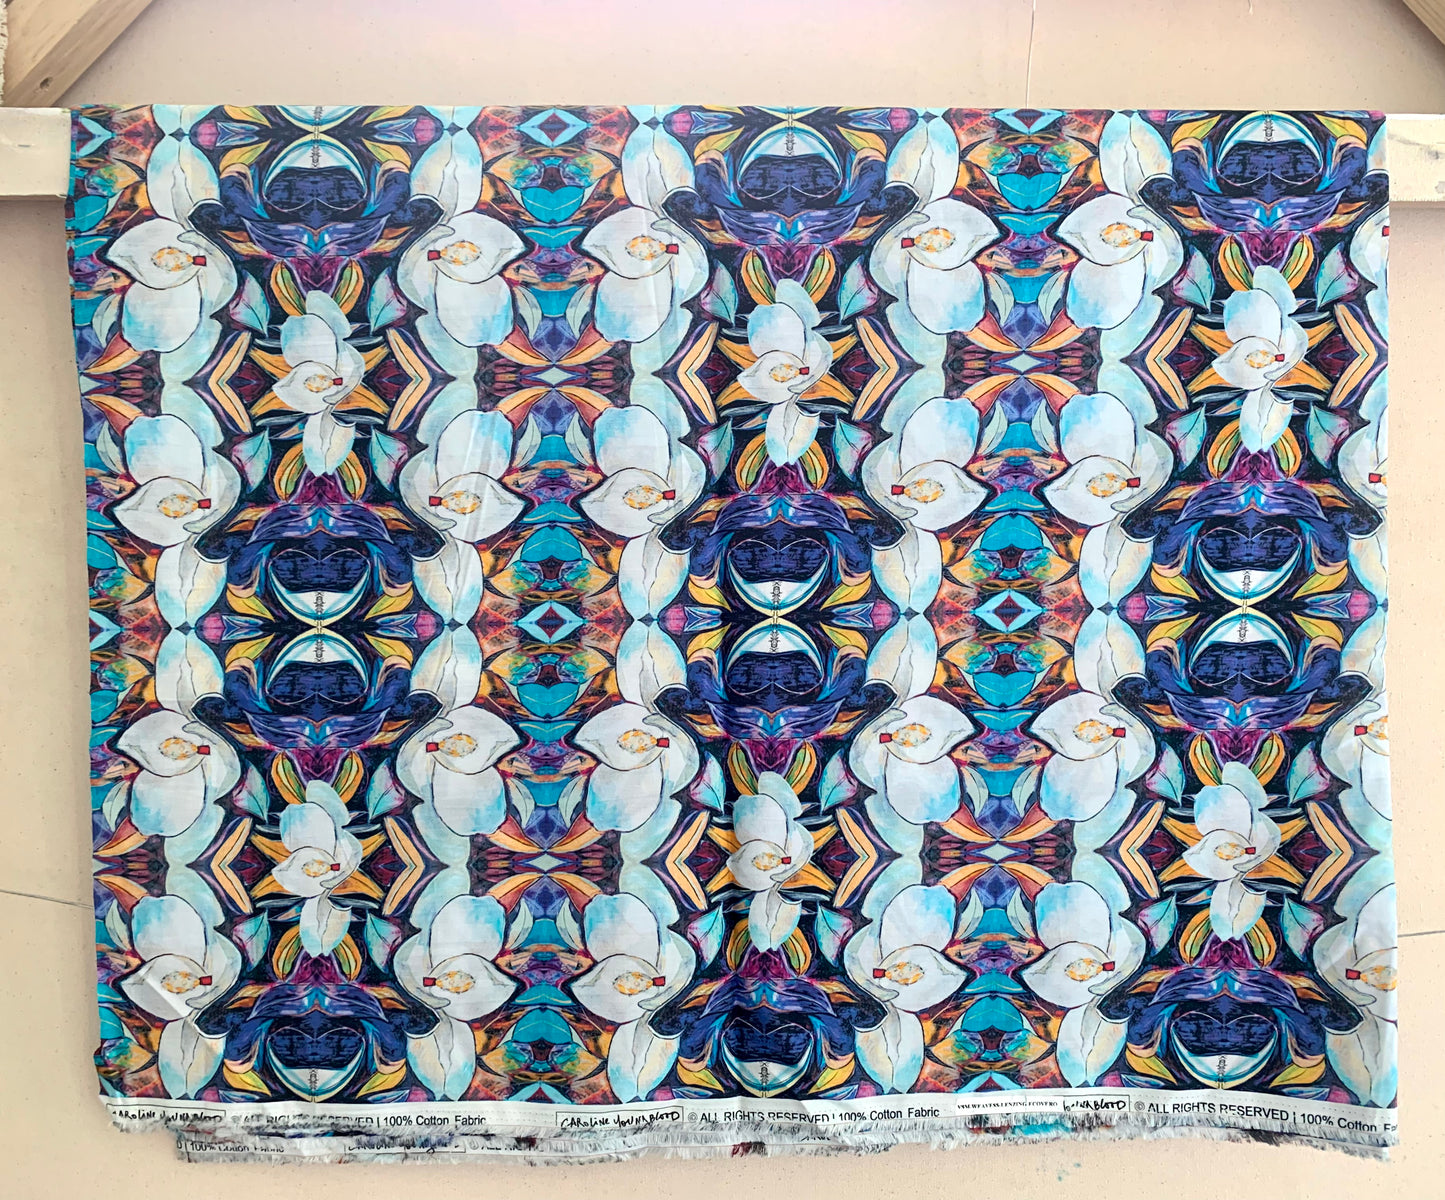 Mardi Gras Magnolia Printed Cotton Fabric